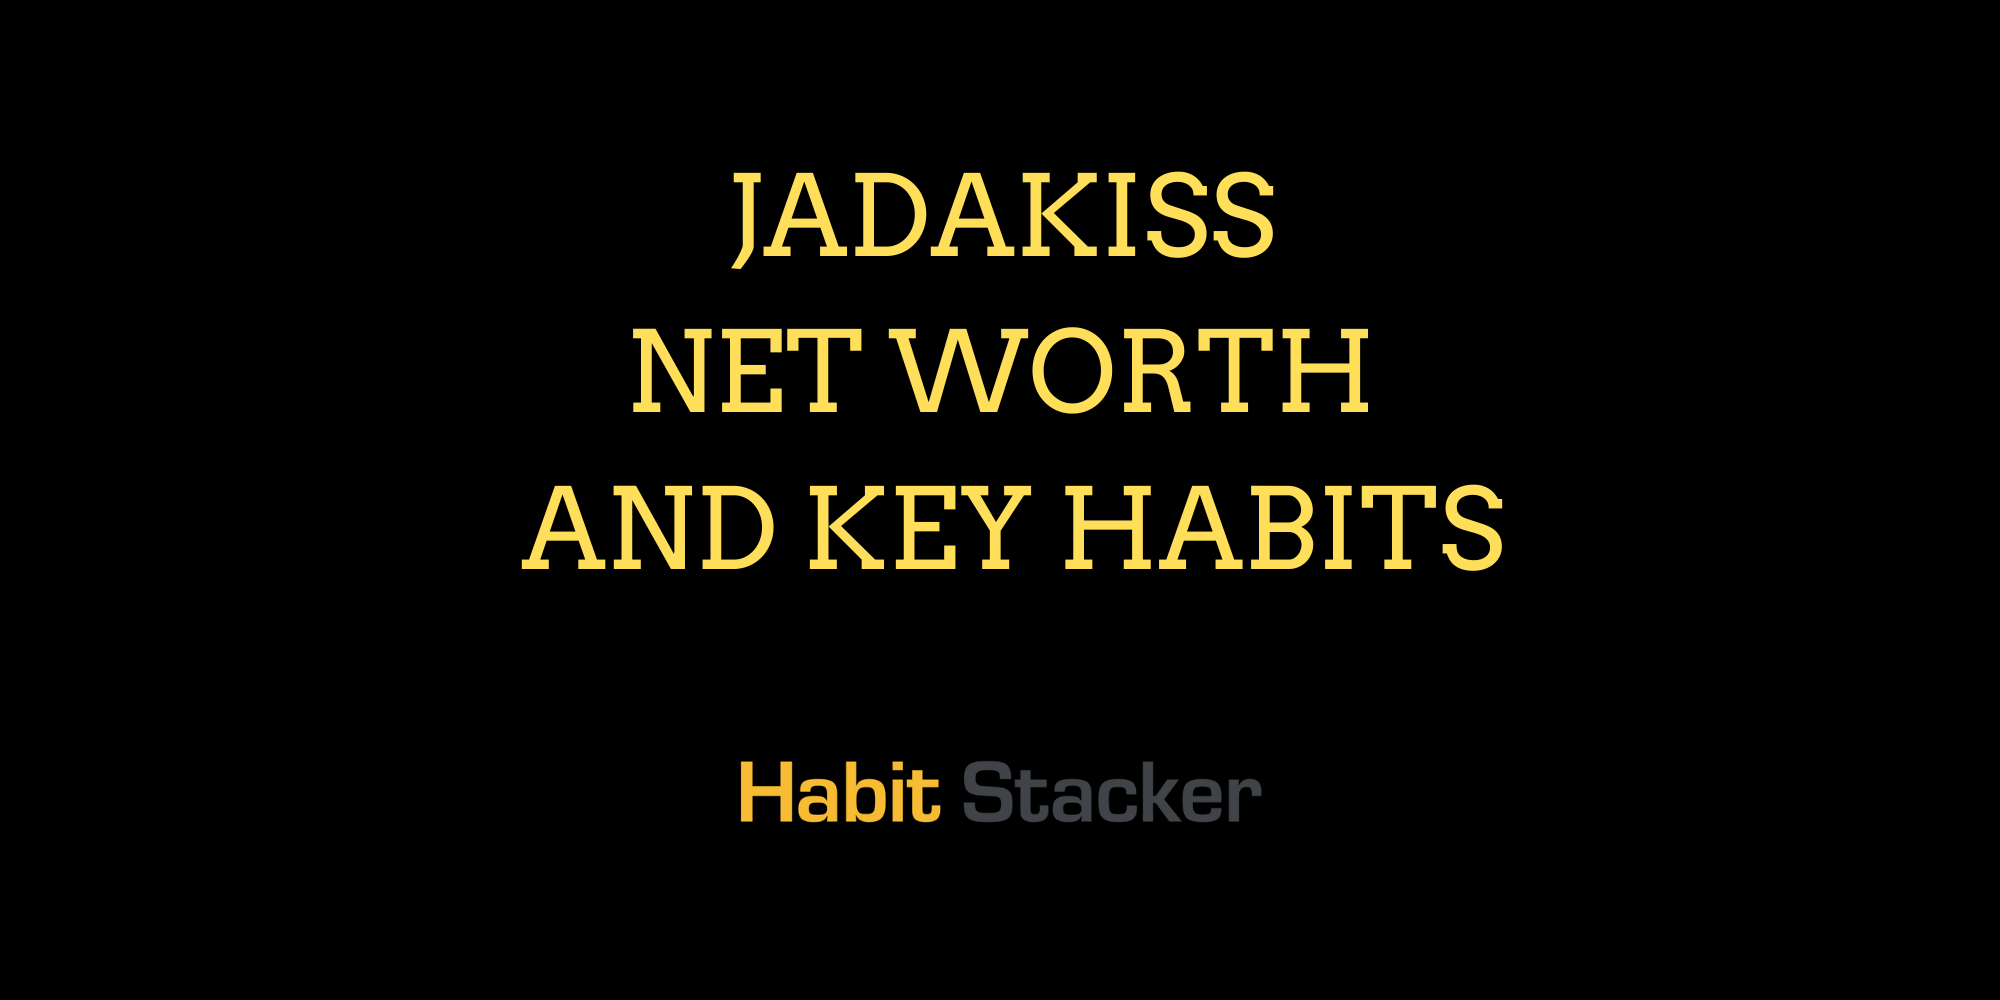 Jadakiss Net Worth and Key Habits